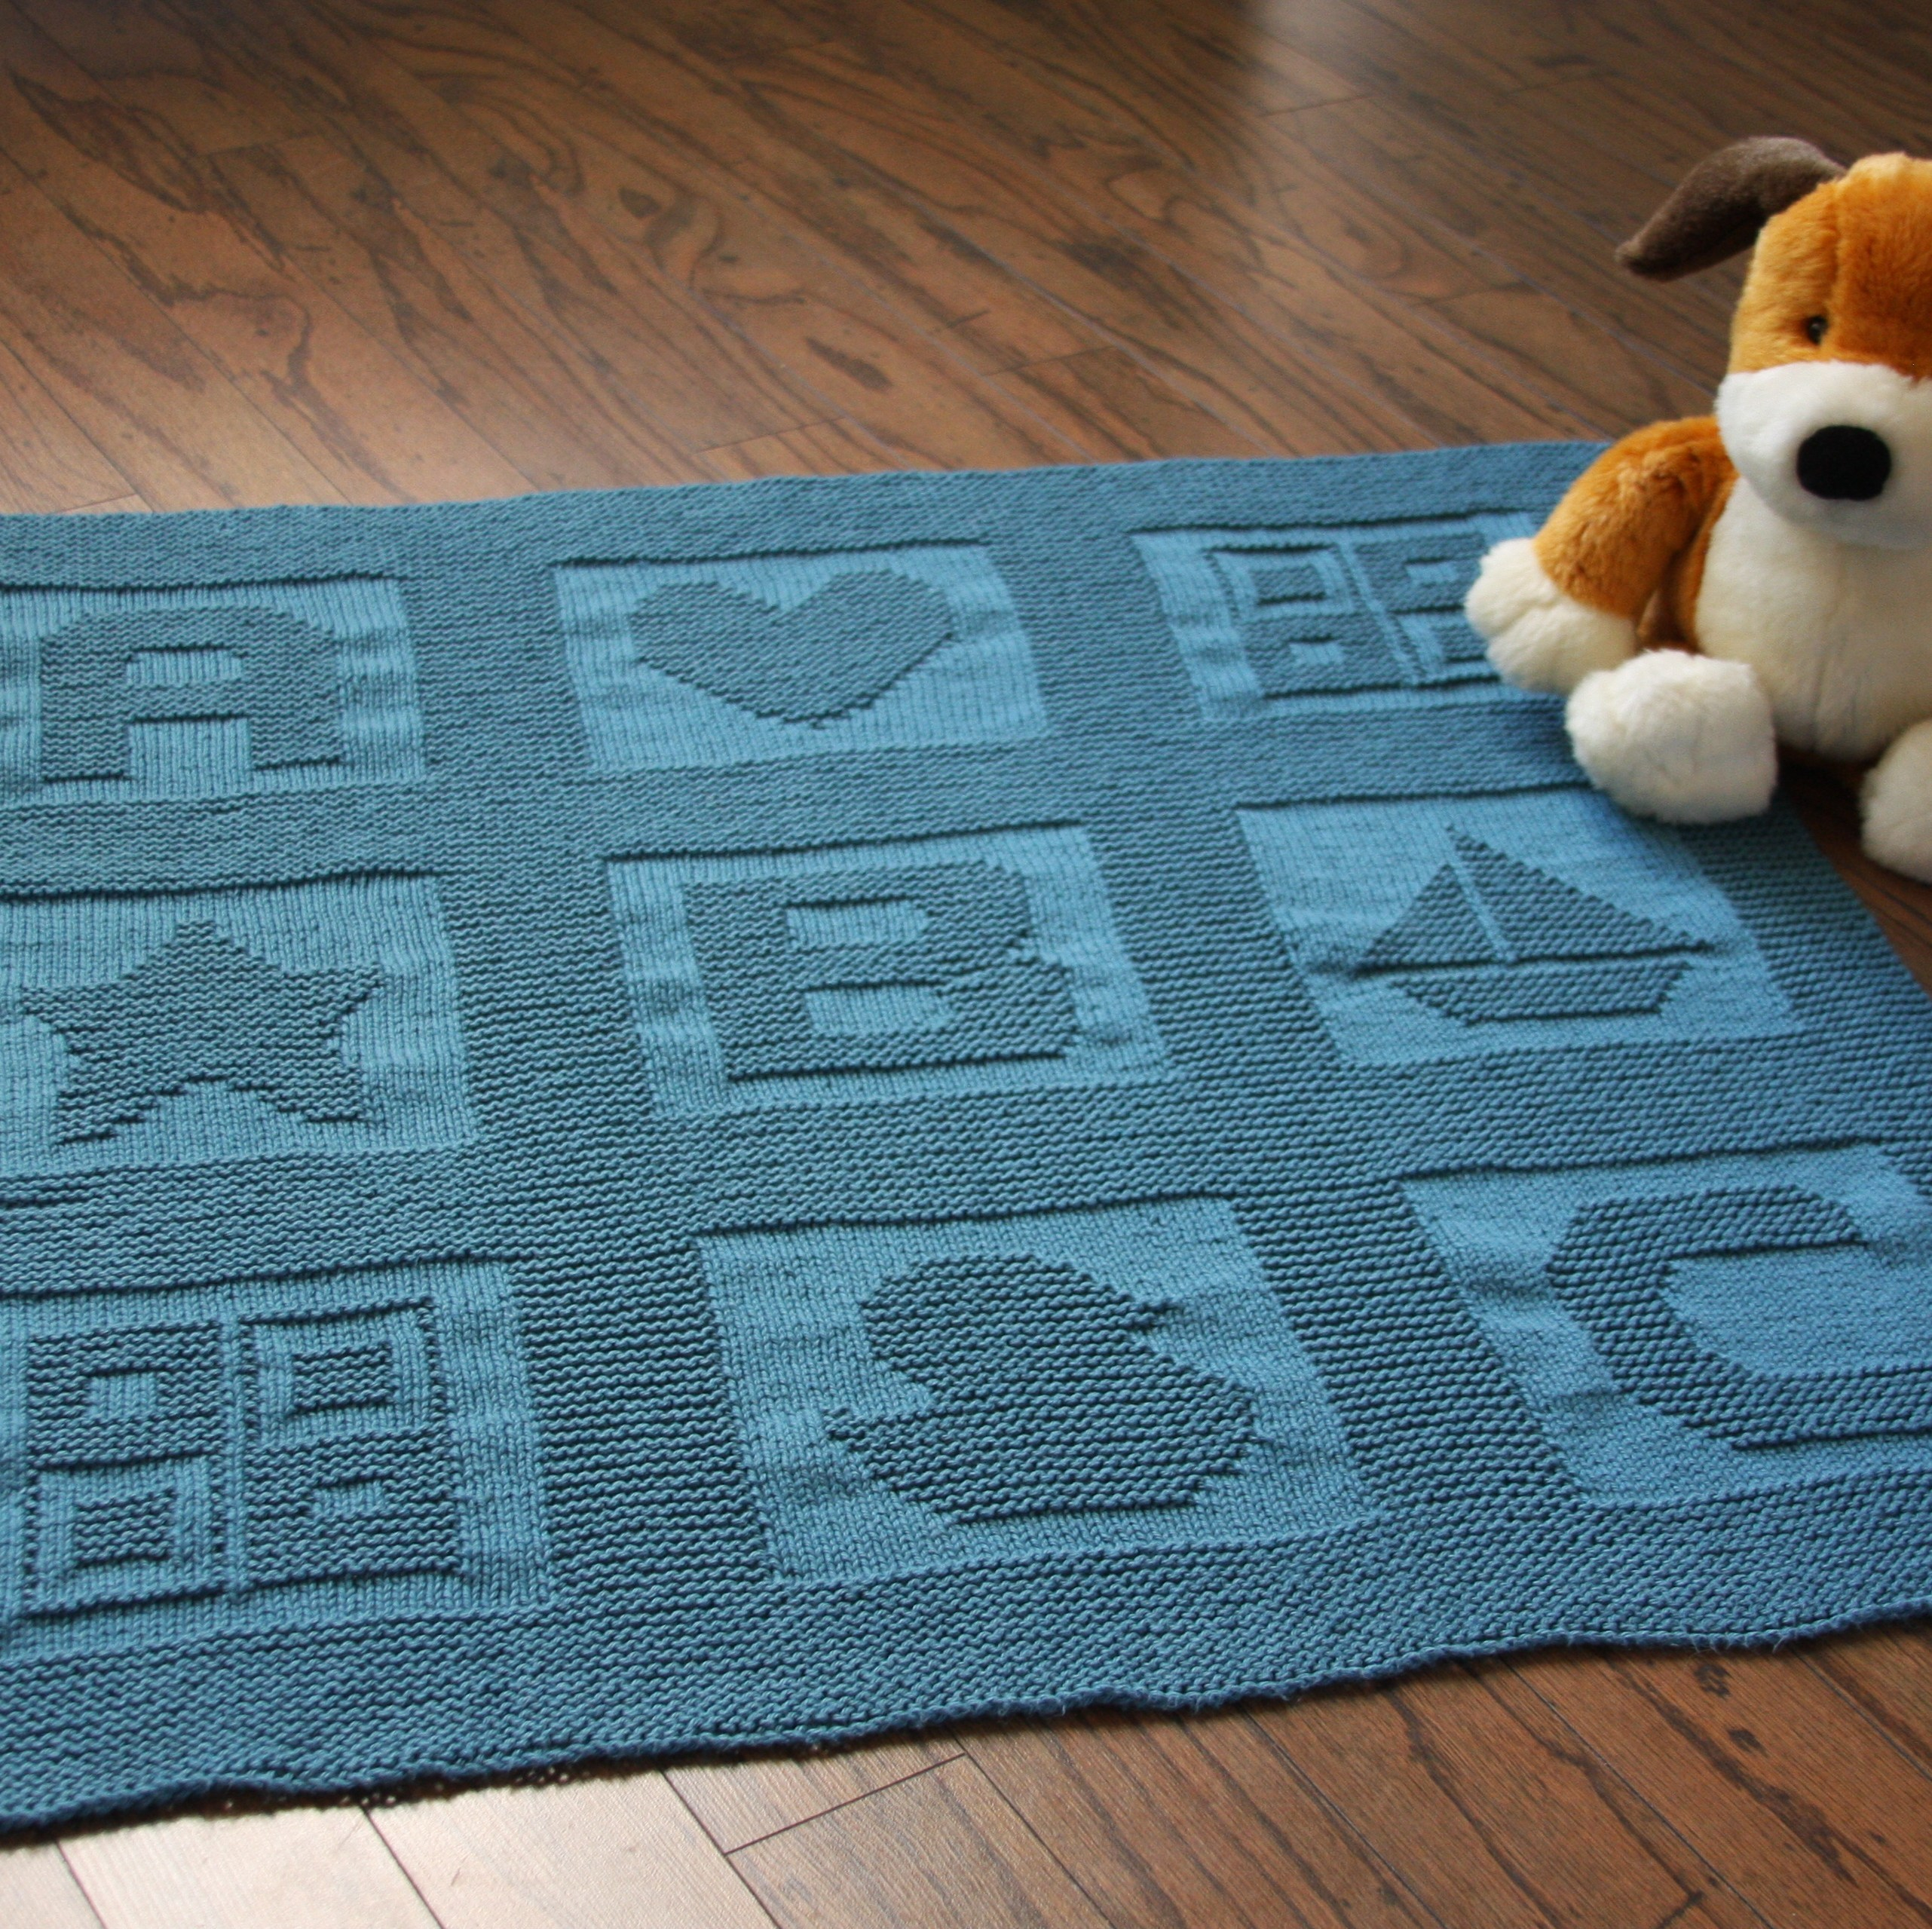 Irish Knit Baby Blanket Pattern Free Aran Ba Blanket Knitting Patterns Crochet And Knit Easiest